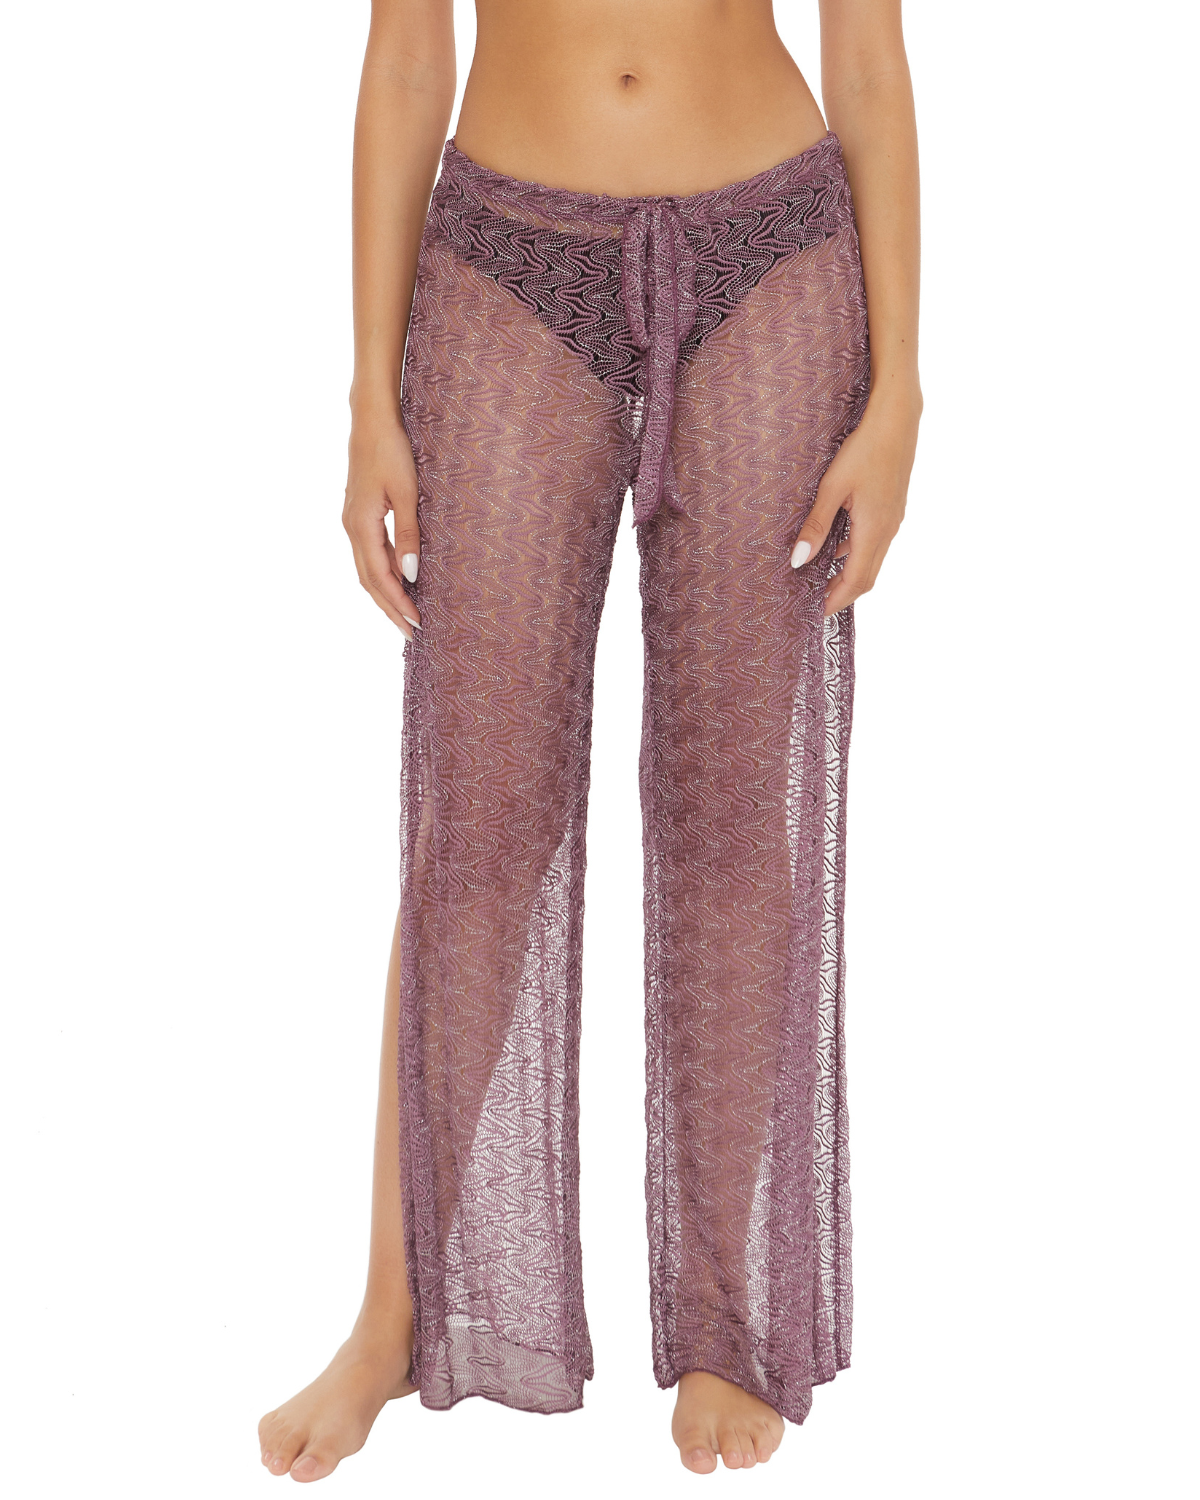 Model wearing a split leg crochet cover up pant in fig